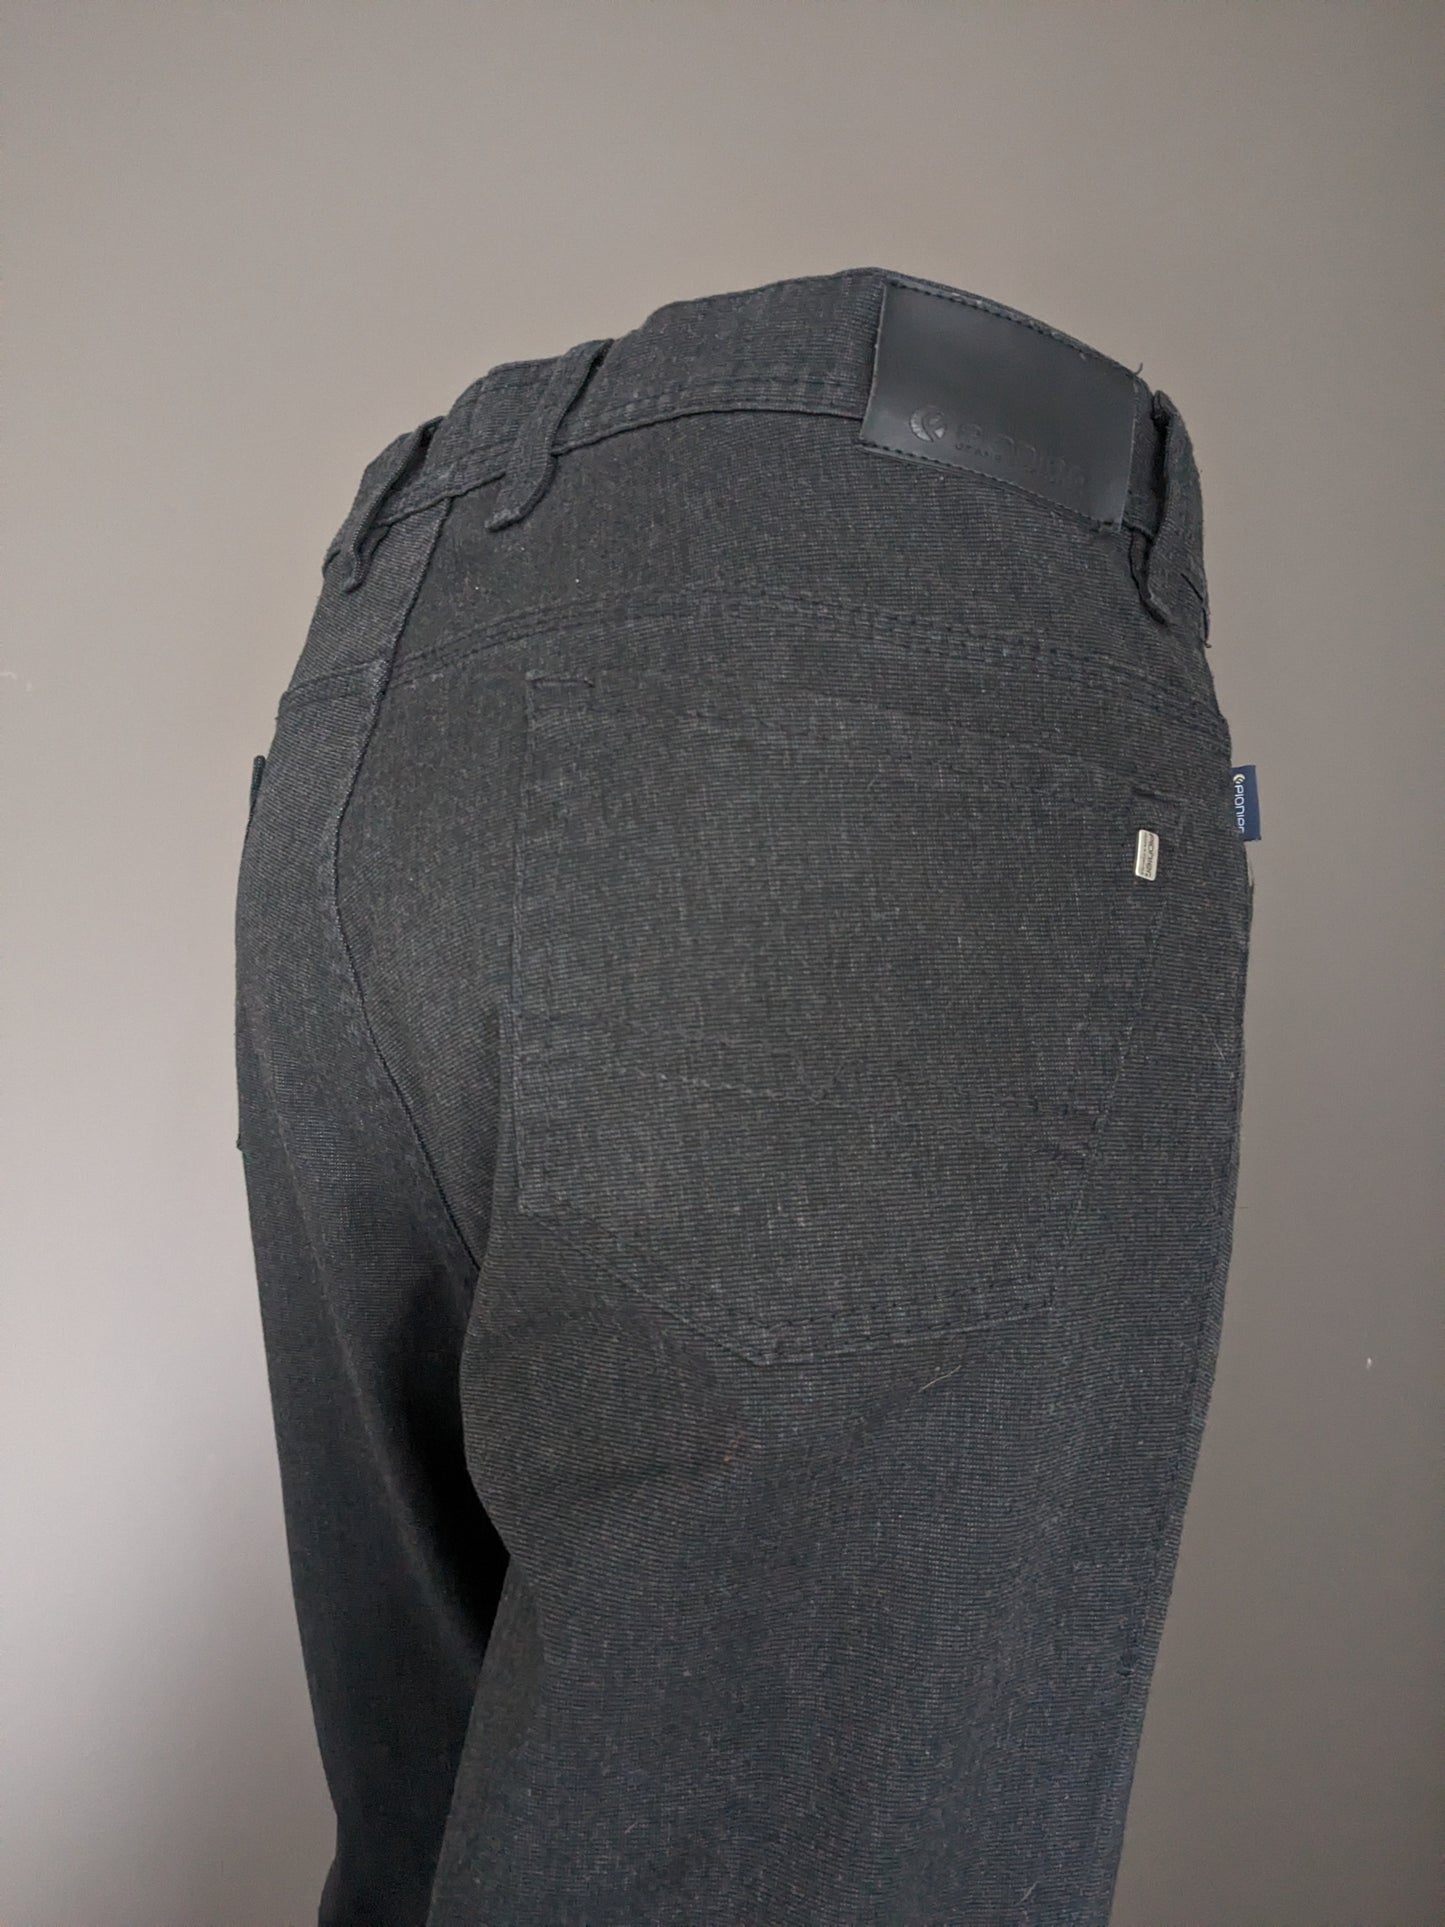 Pantalon pionnier. Motif noir gris. Taille 58 / XL. Type Thomas.